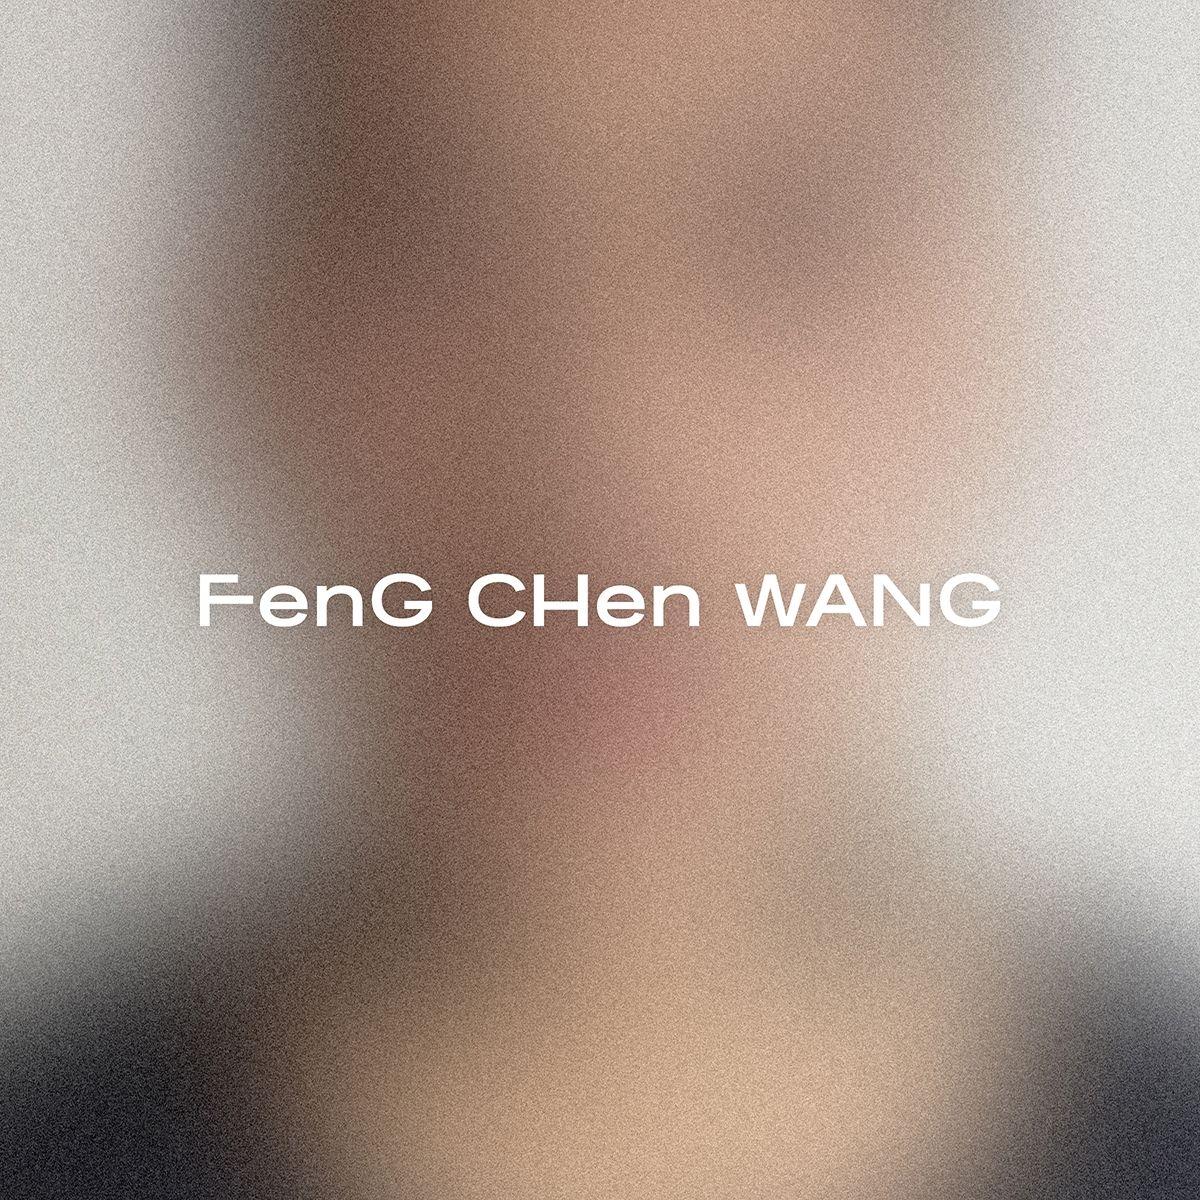 Feng Chen Wang: 'An Ode to Community'